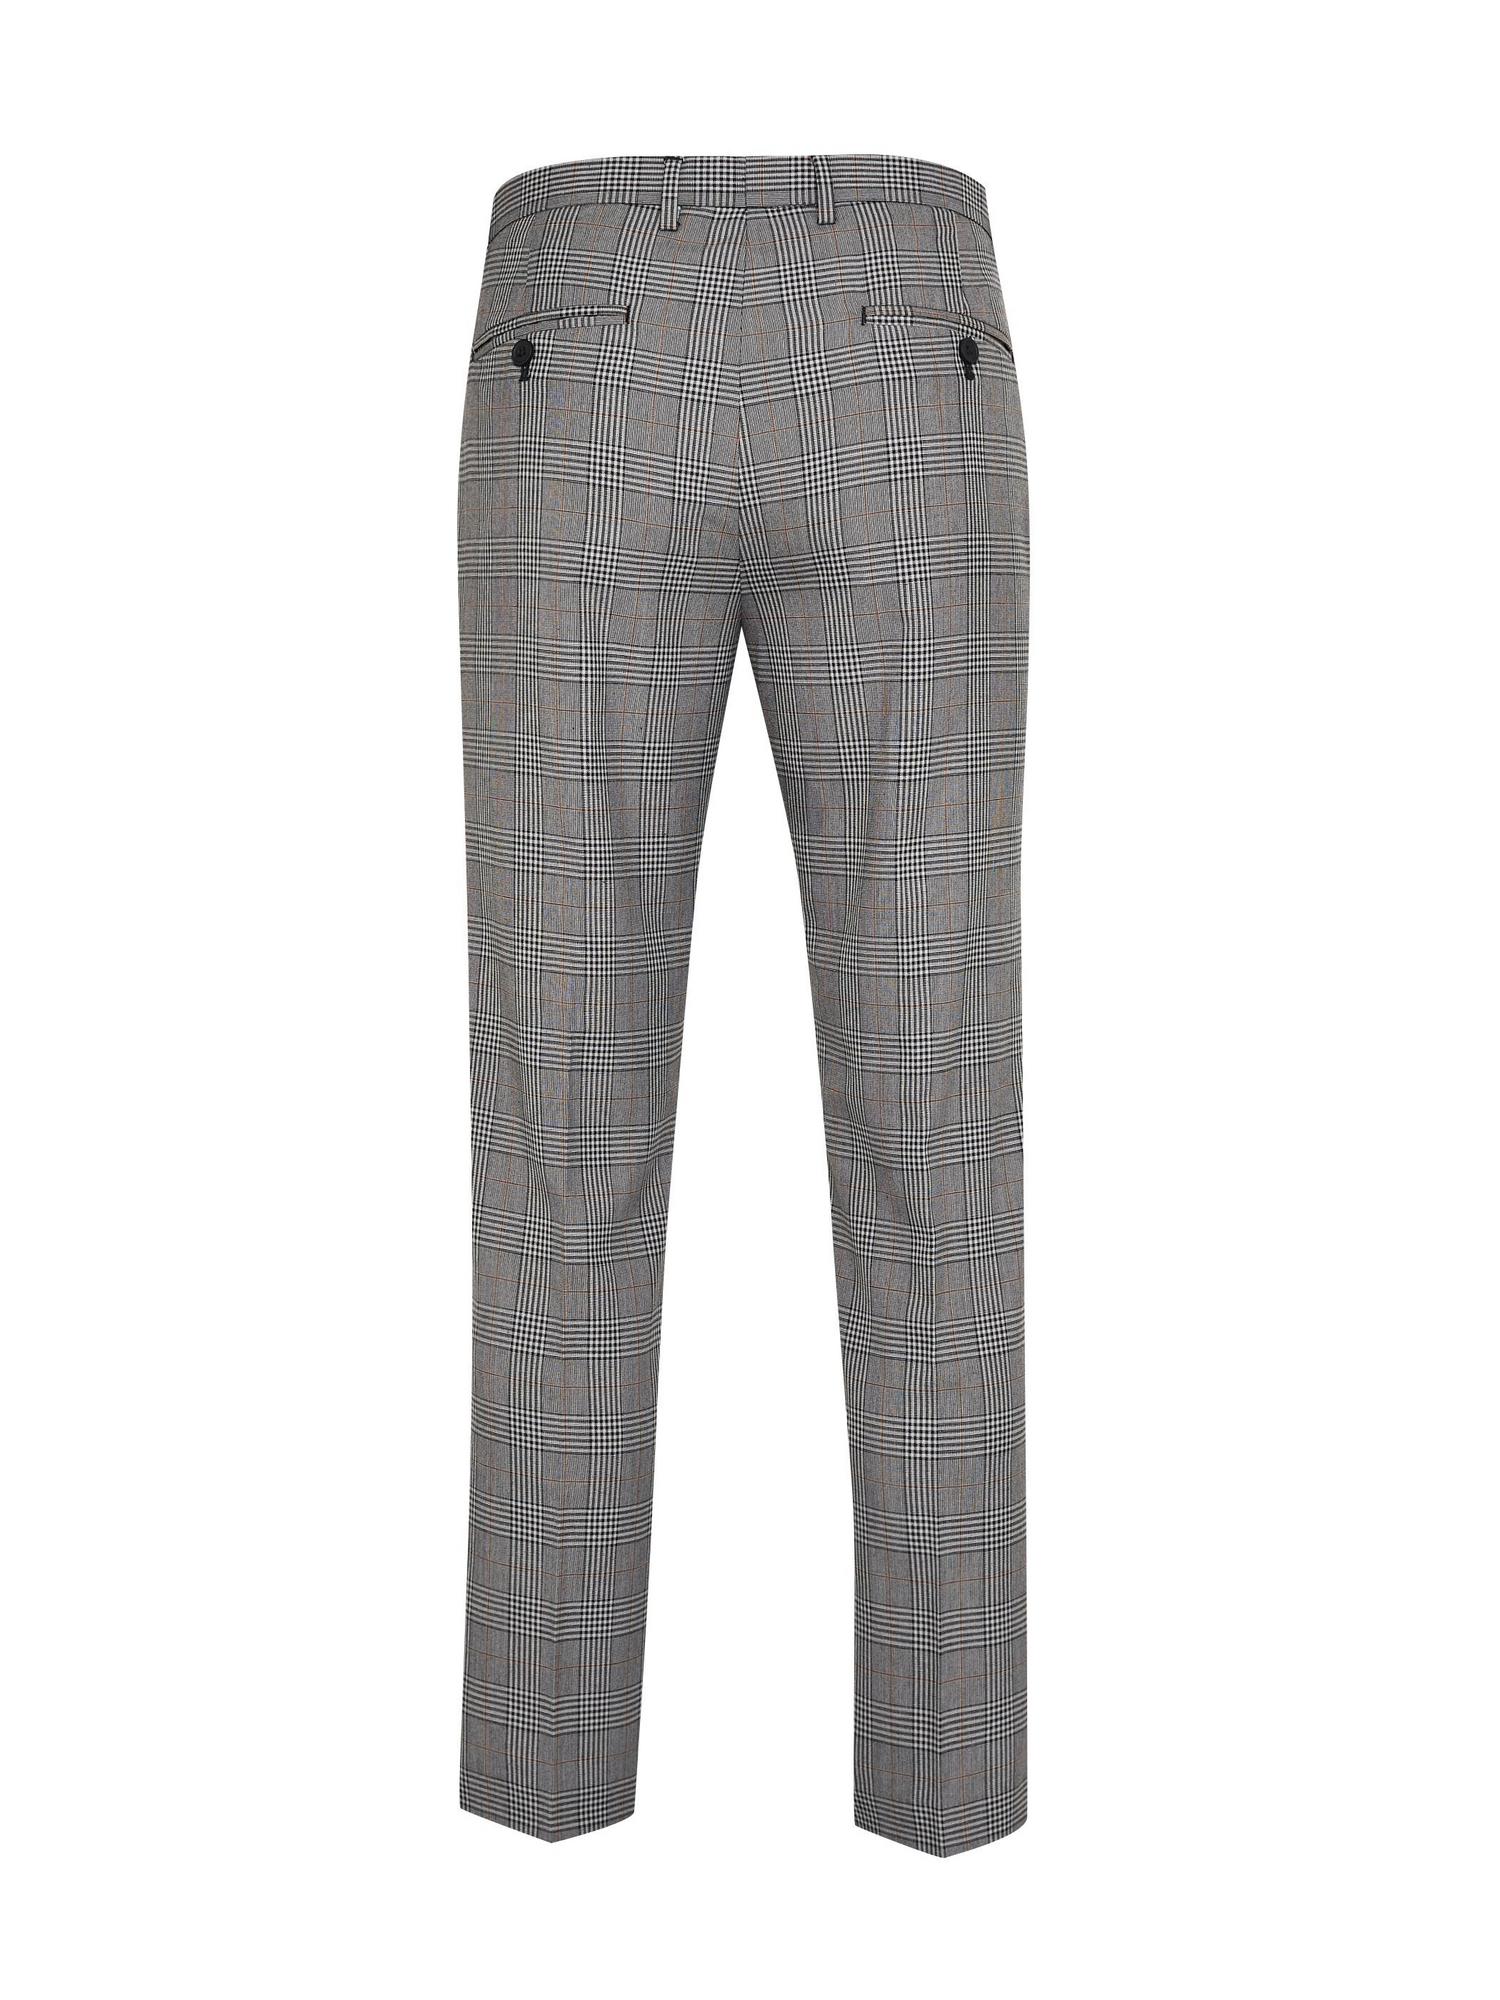 Charcoal Skinny Check Trousers | Burton UK